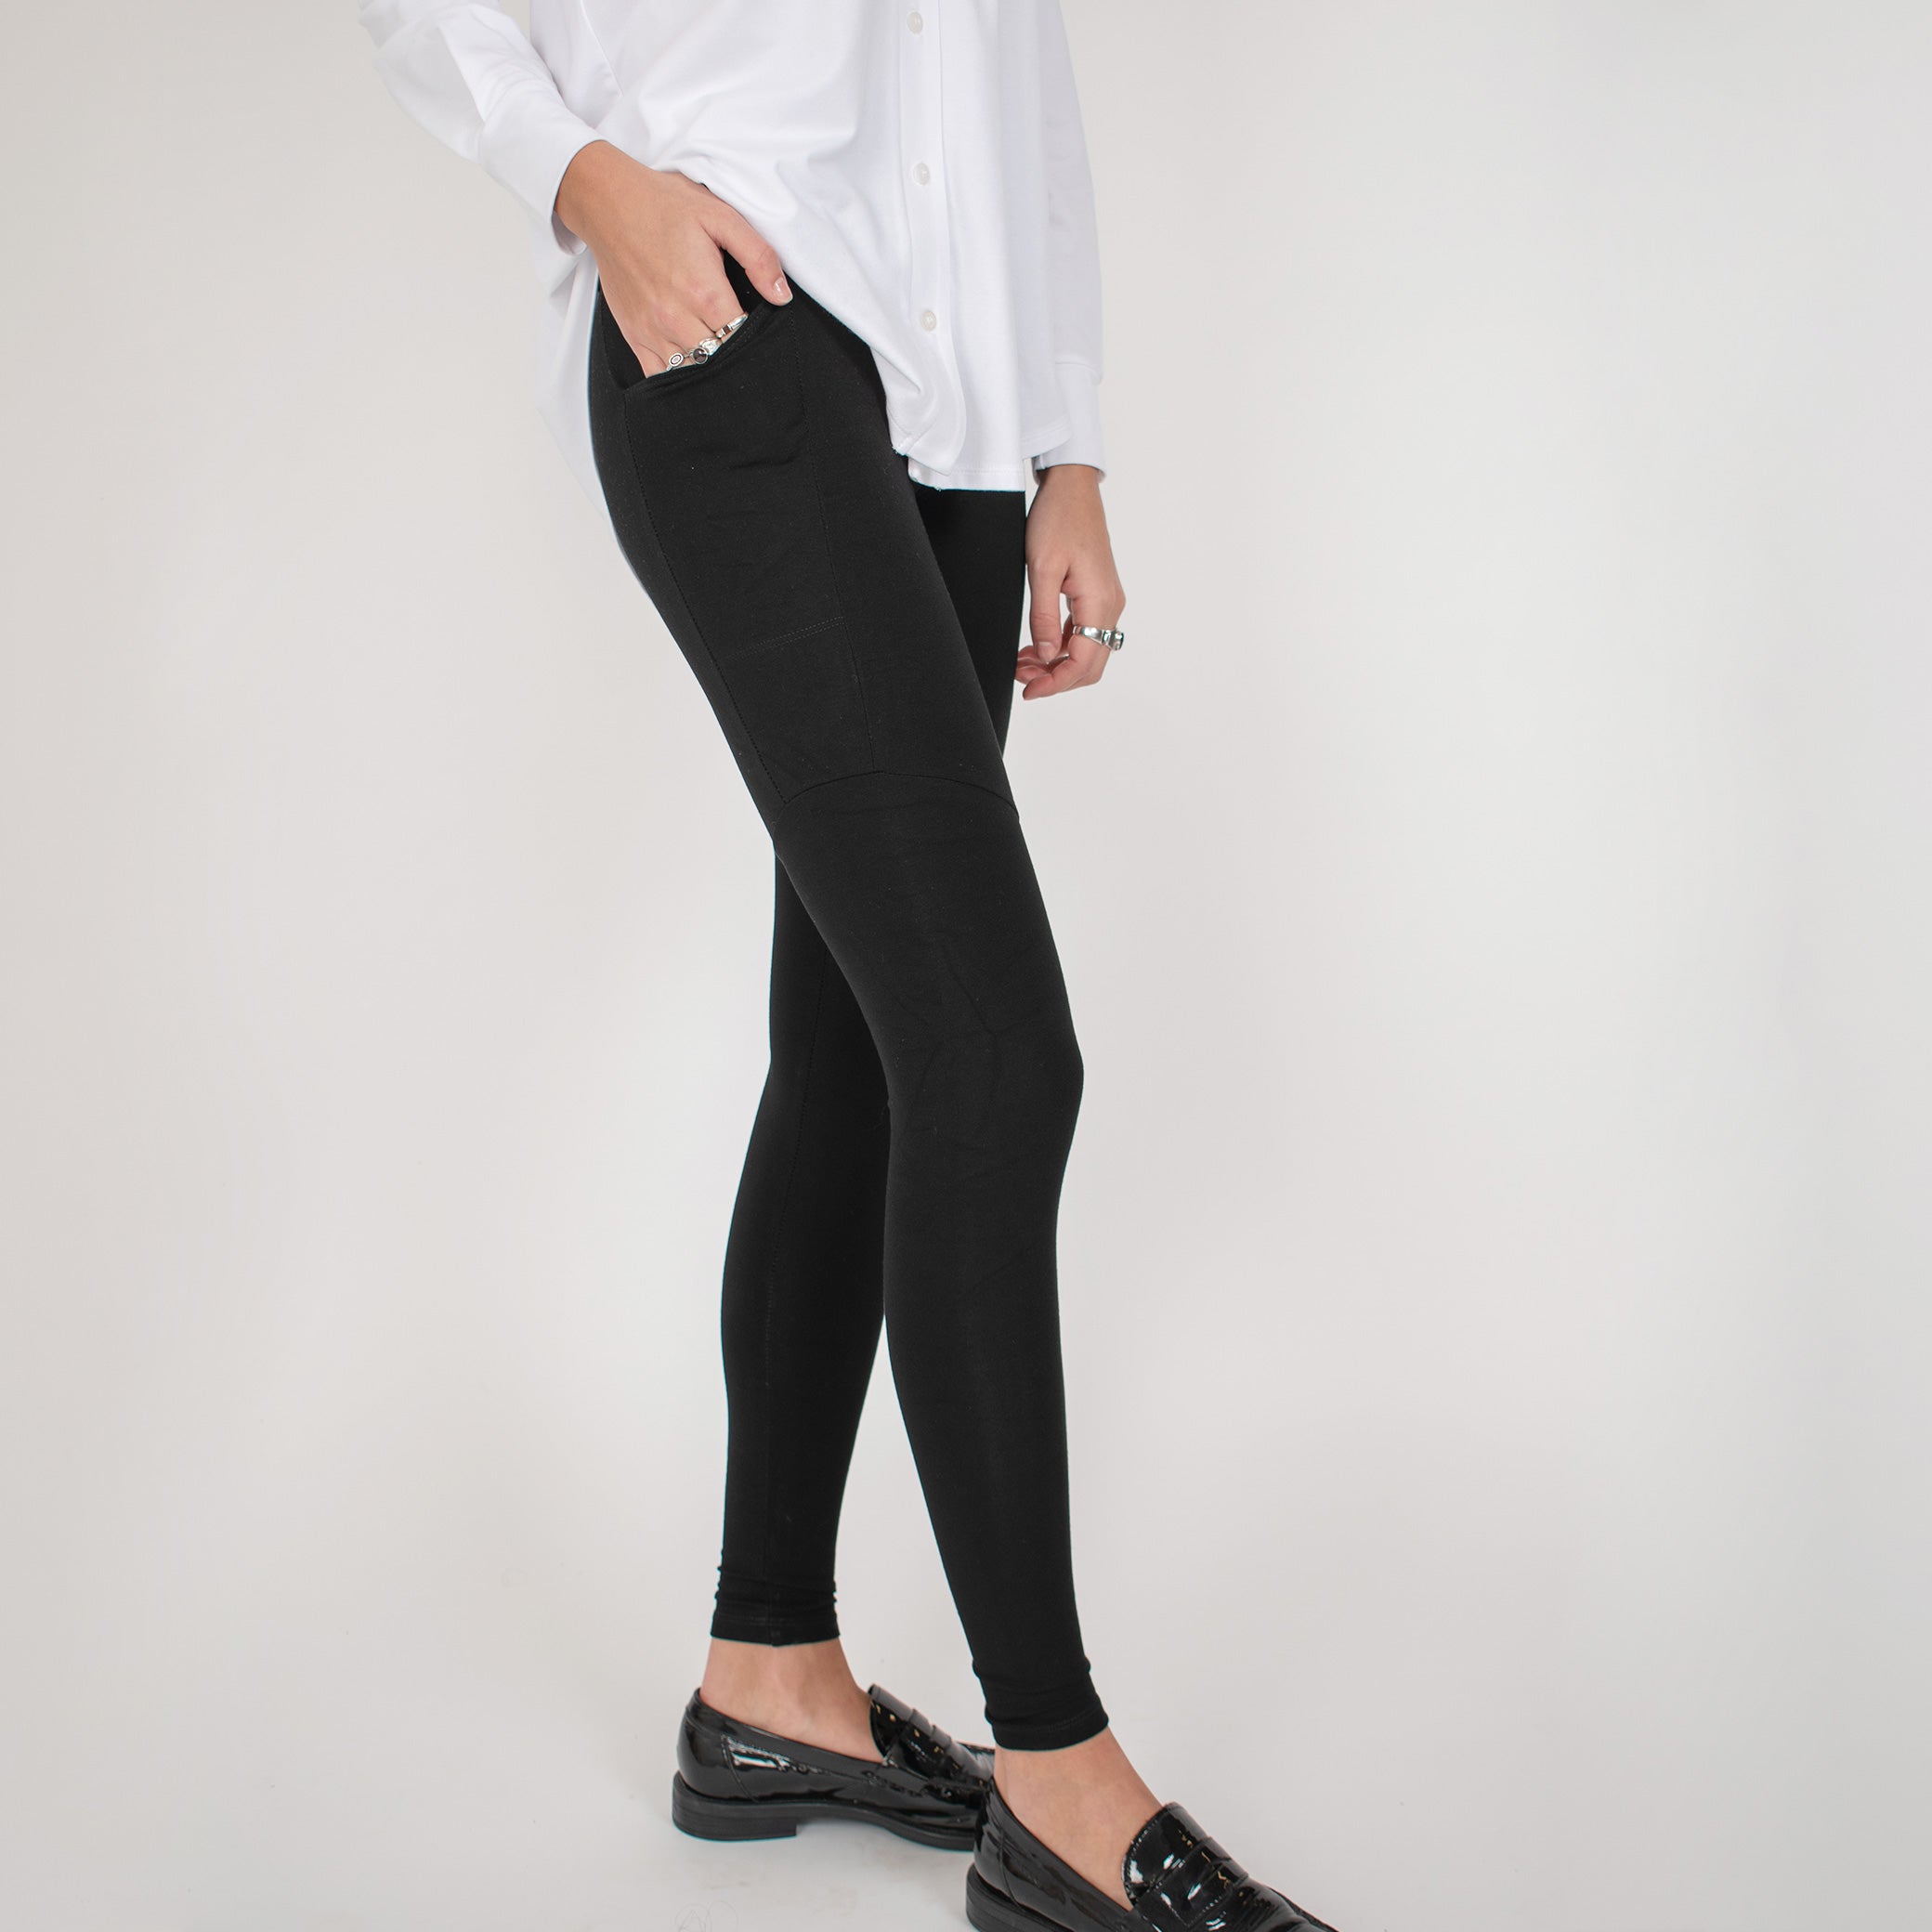 HUE Women's Perfect Legging Tunic Tee, Black – Long Sleeve, Small